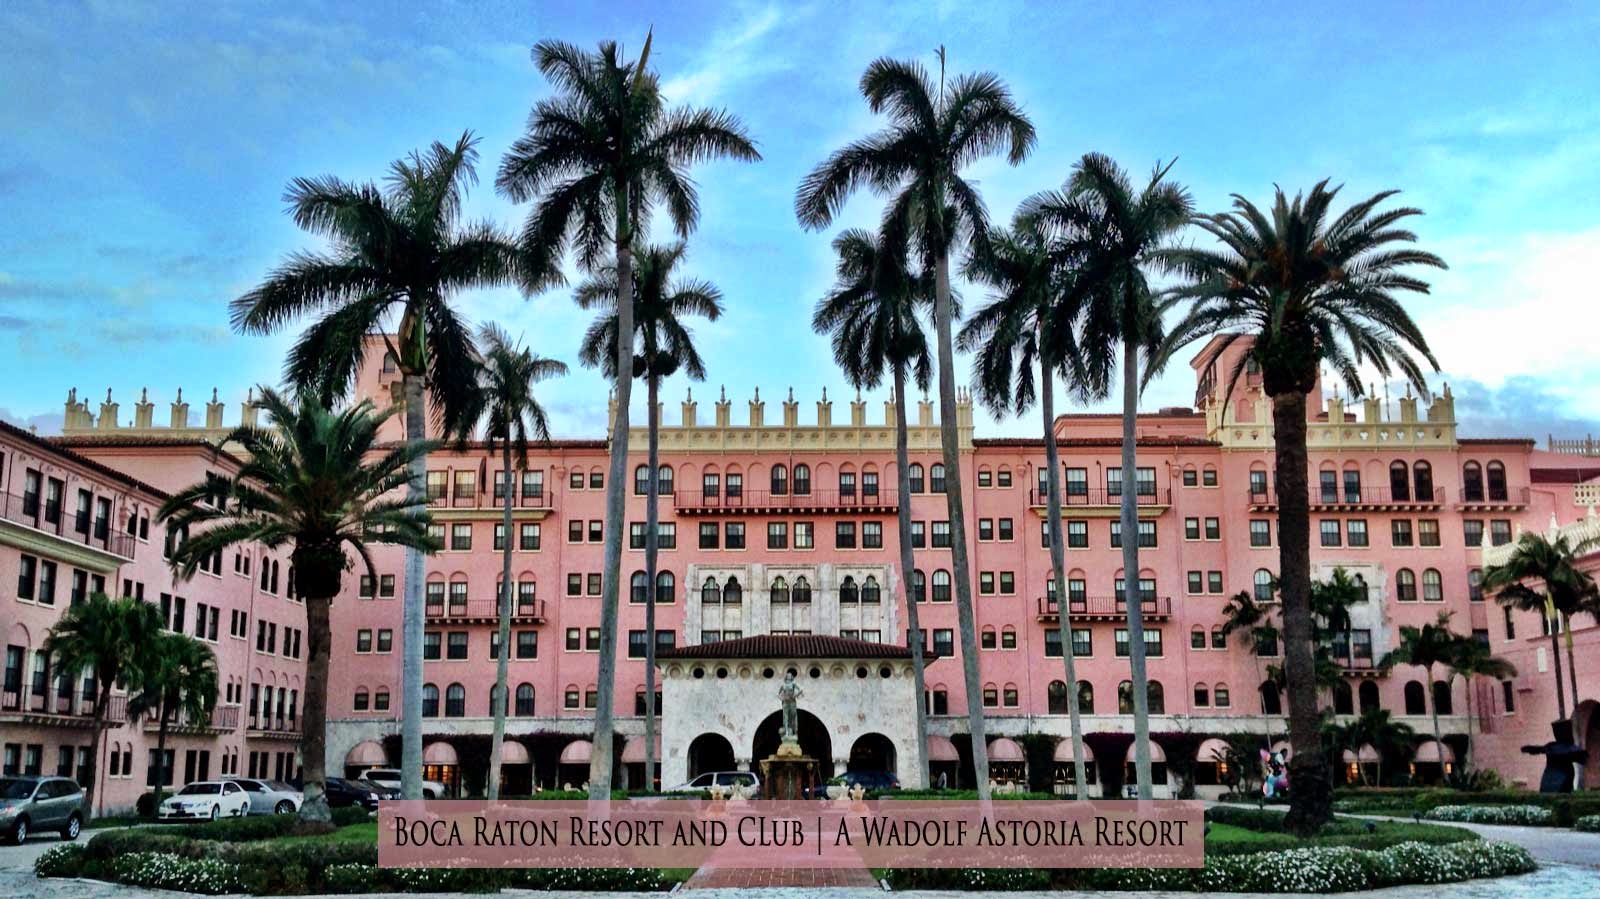 Boca Raton Resort and Club designed by Addison Mizner